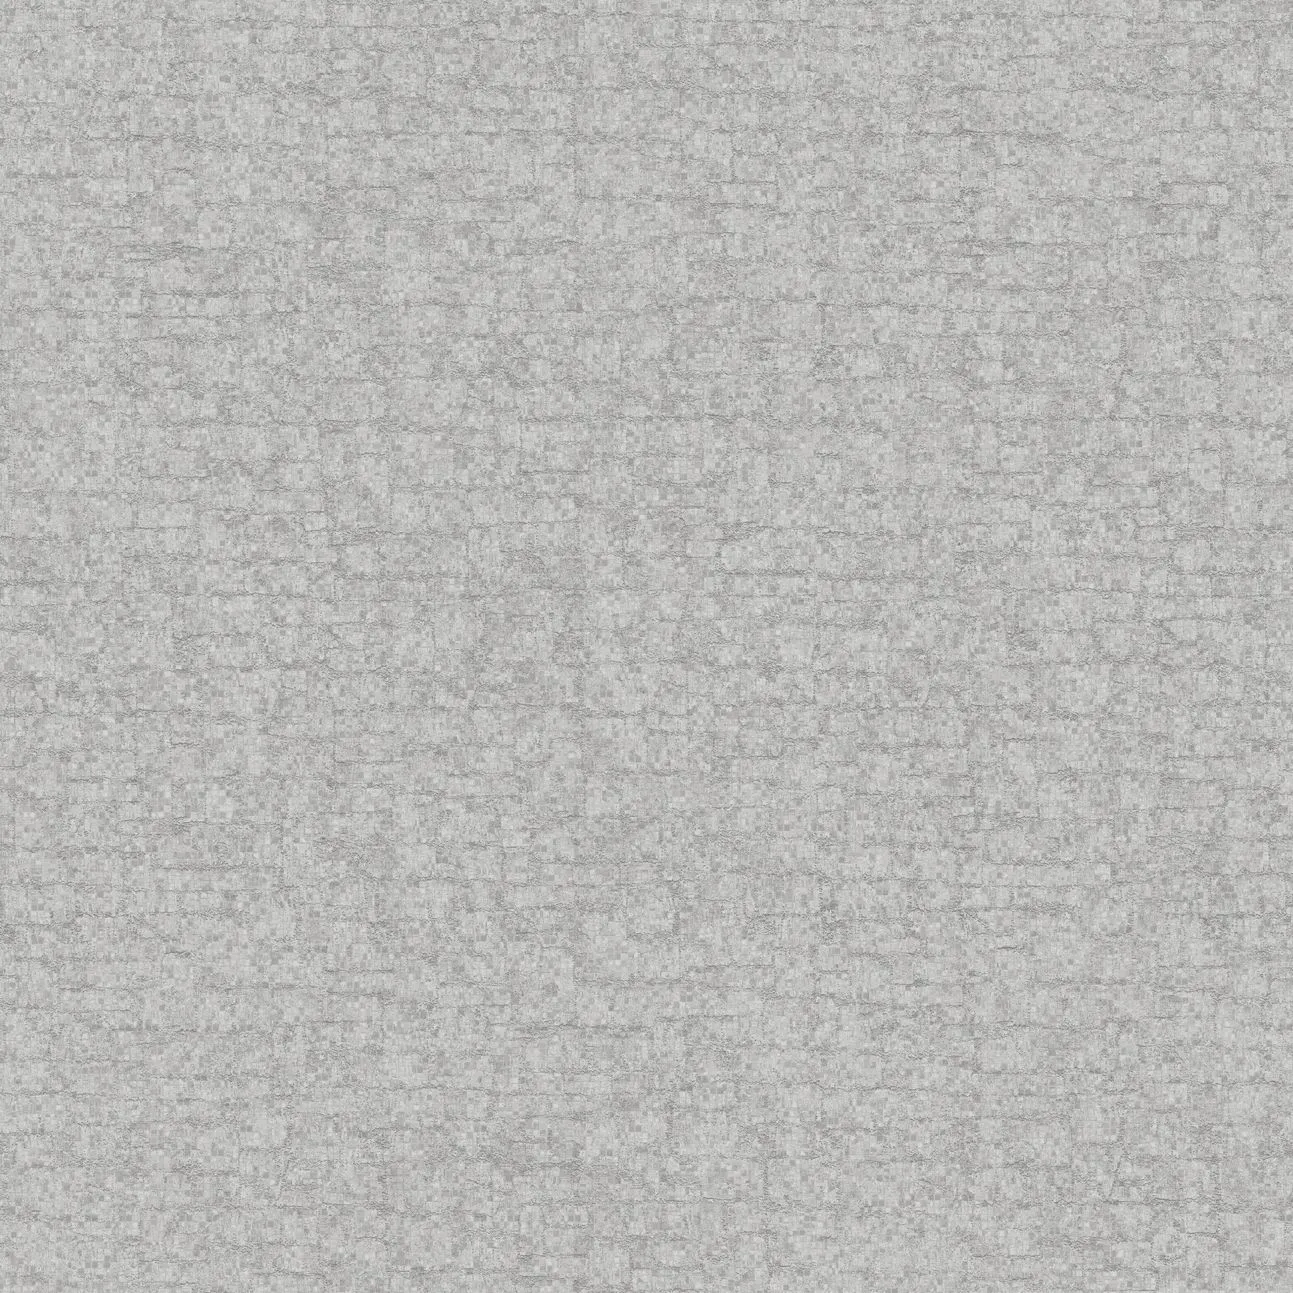 Holden Décor Hadrian Texture Silver effect Smooth Wallpaper